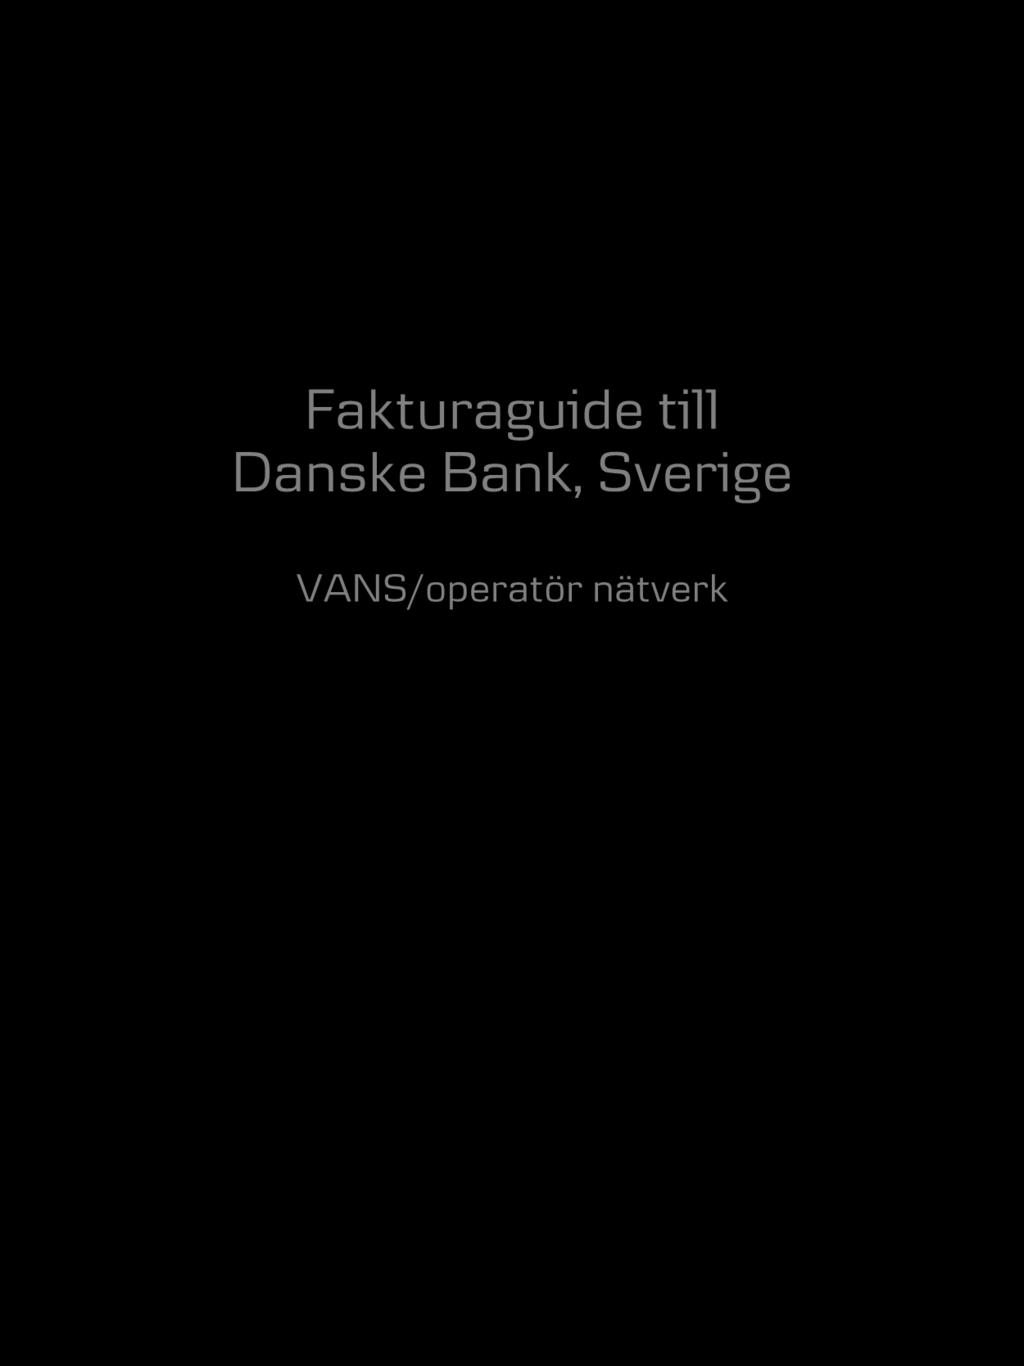 Bank, Sverige